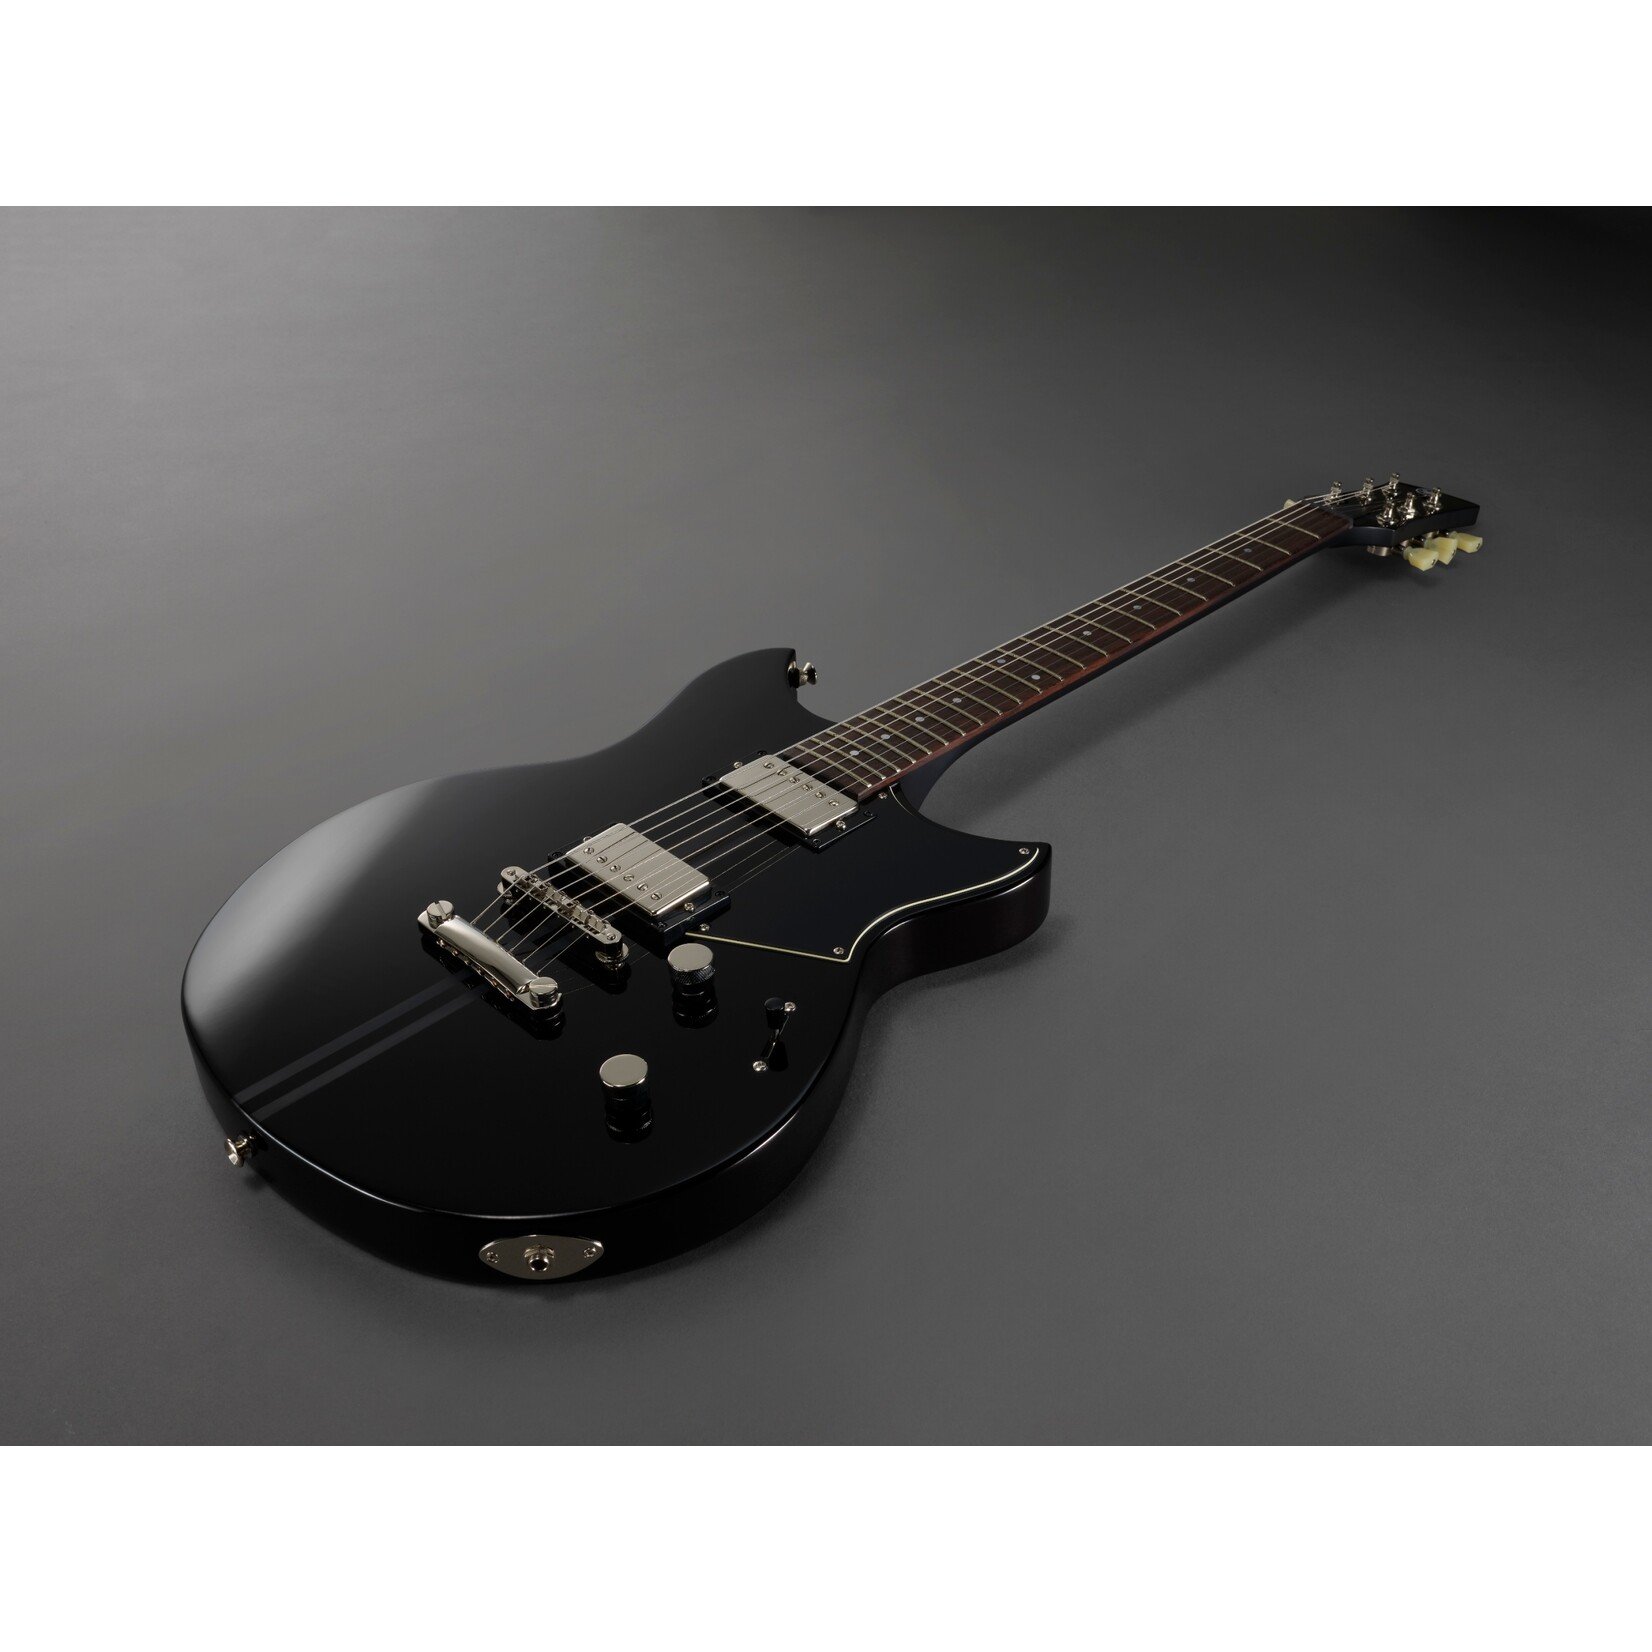 Yamaha Yamaha Revstar Element RSE20 Electric Guitar in Black